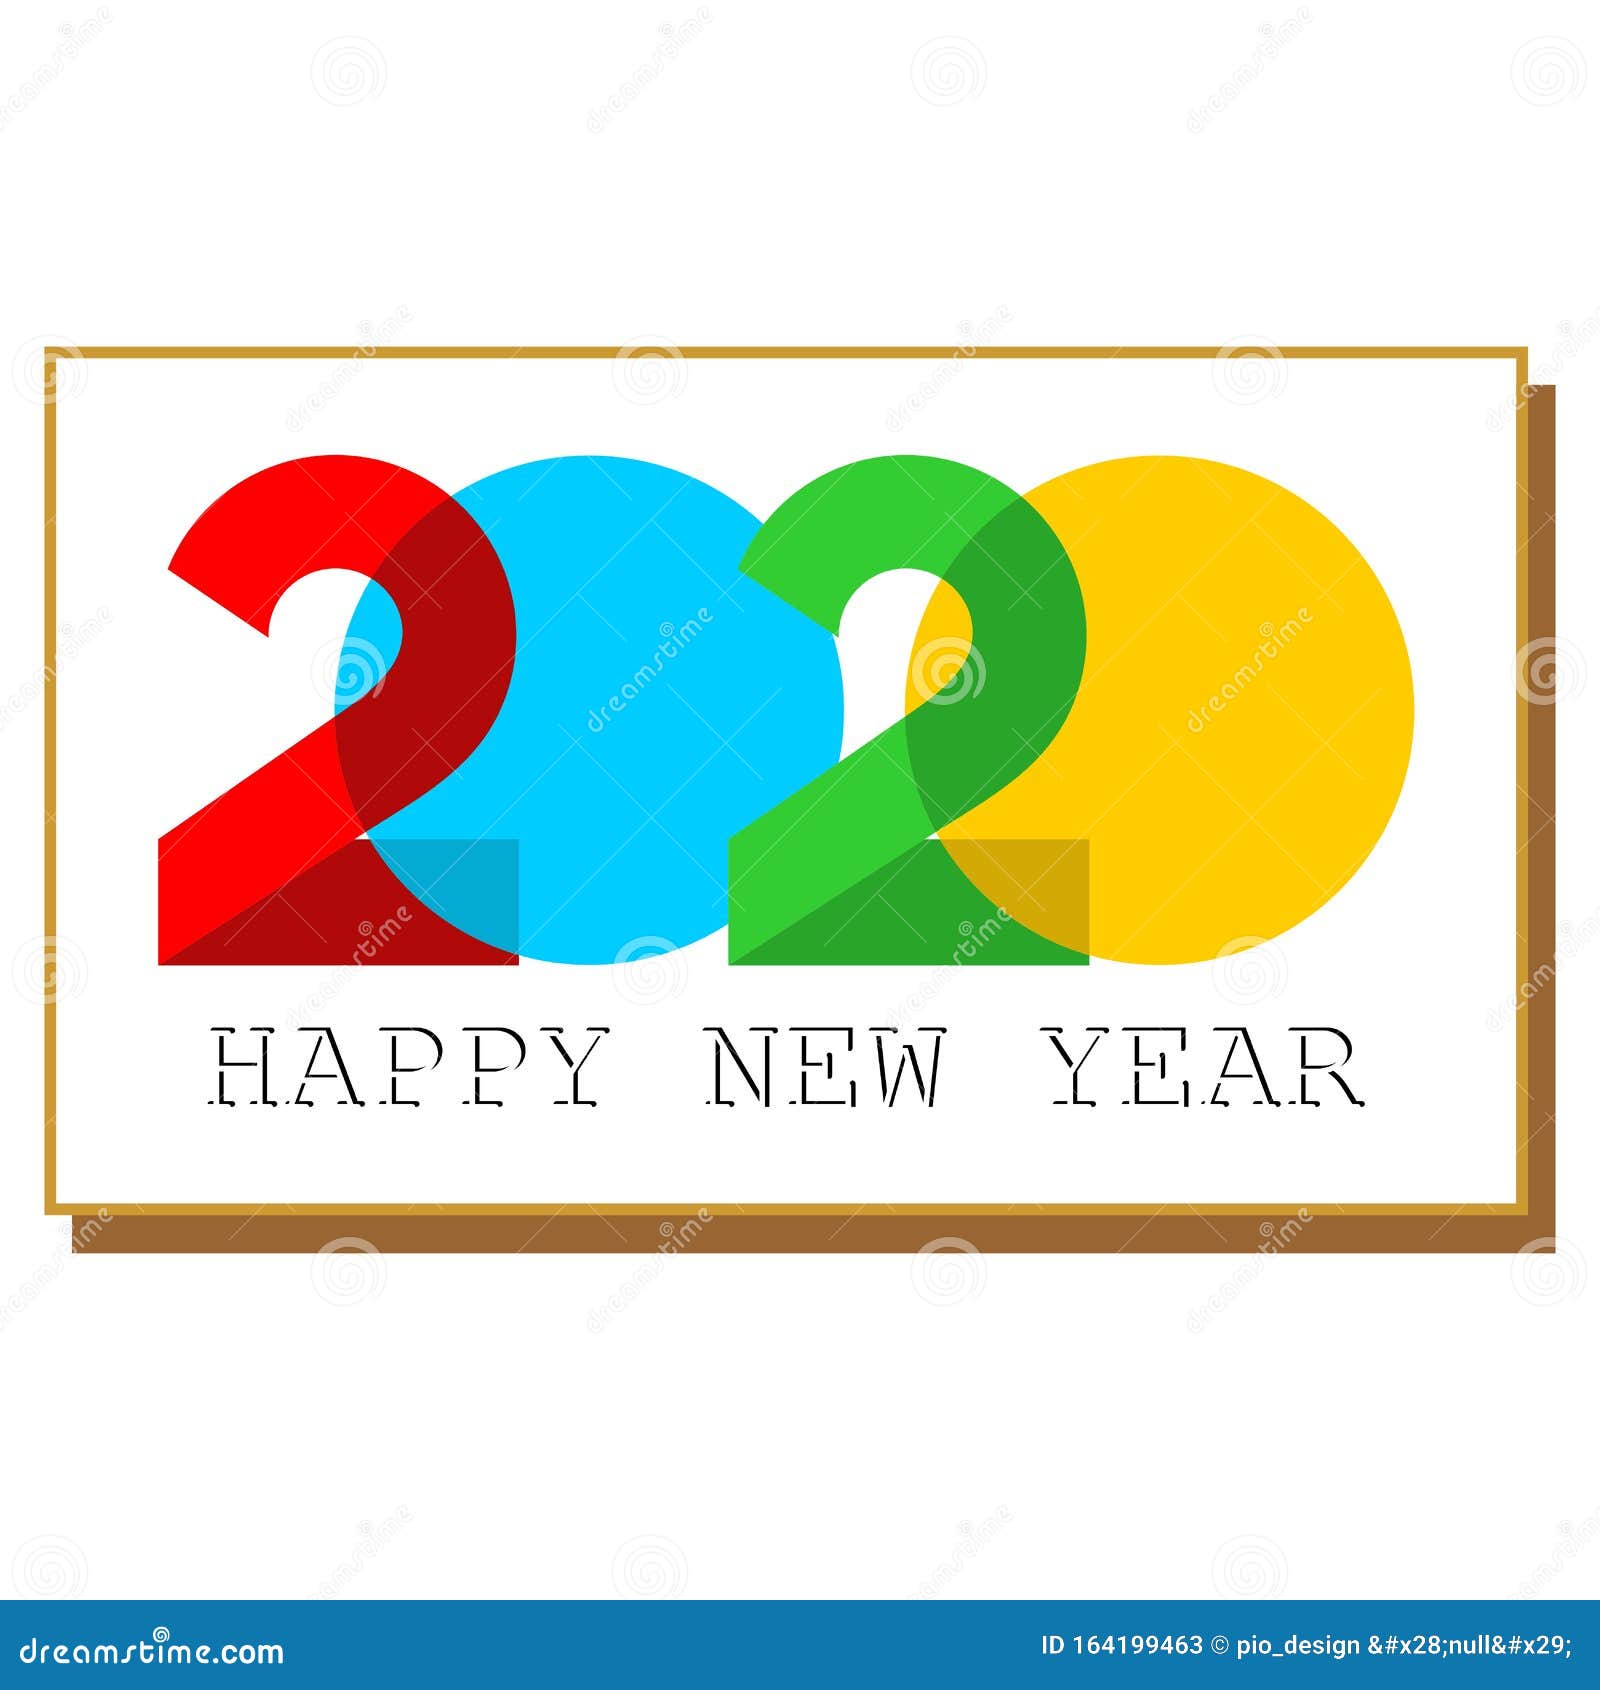 Simple Design Logo Happy New Year 2020 Stock Image - Illustration of ...